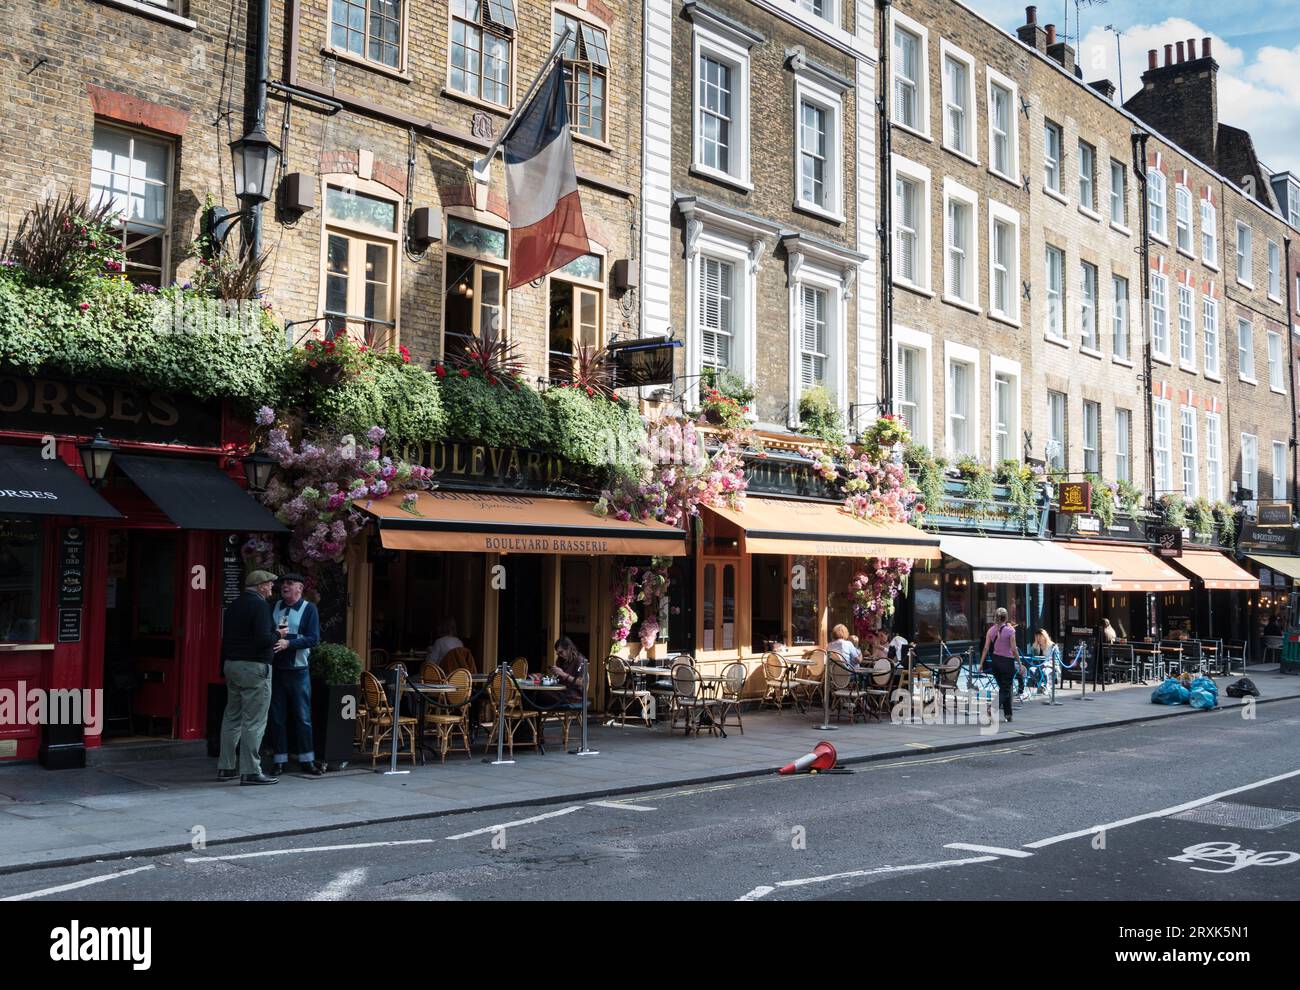 Traditional Boulevard Brasserie on Wellington Street, Covent Garden, London, WC2, England, U.K. Stock Photo